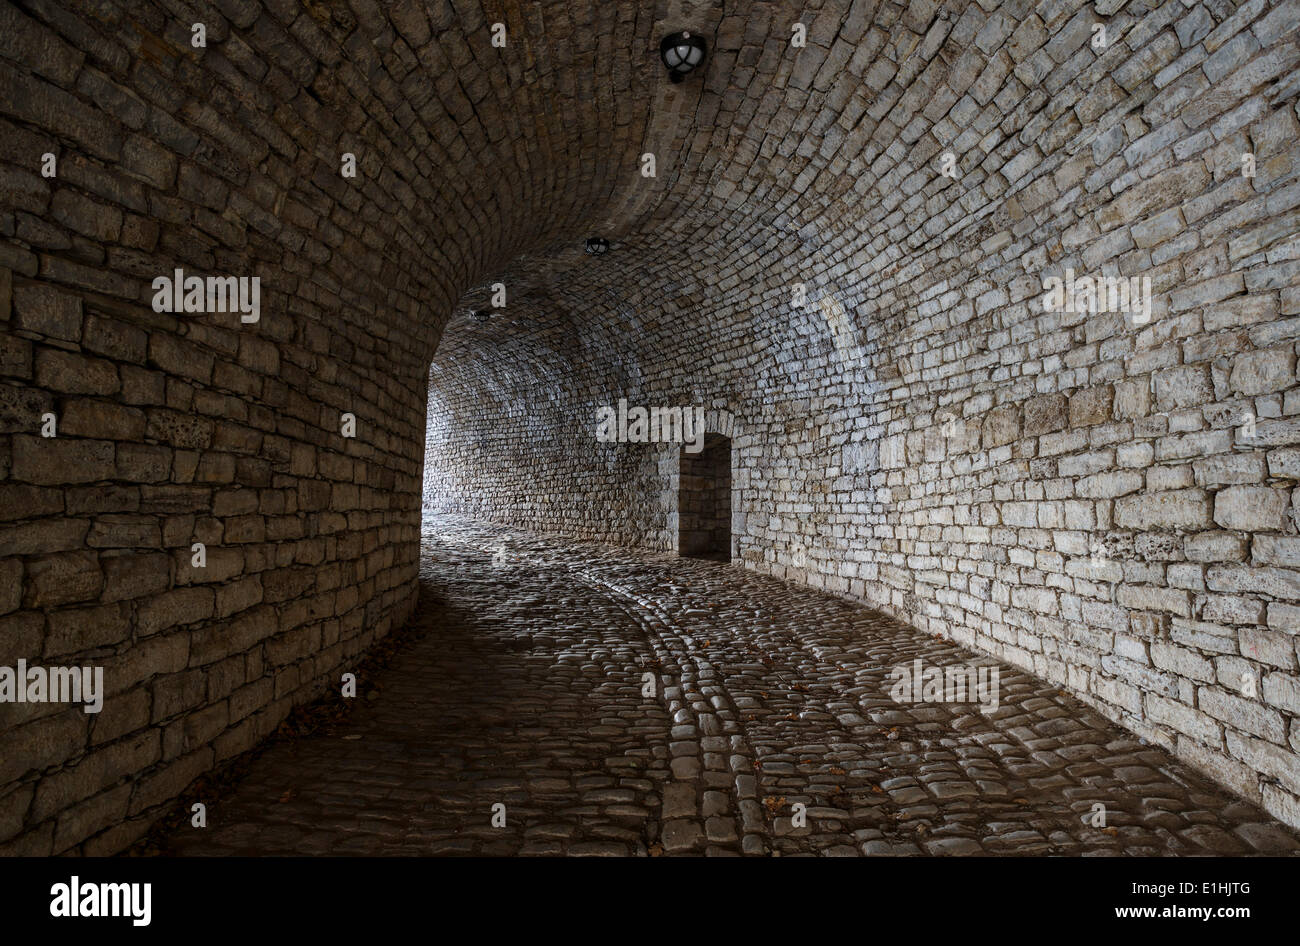 Passage under the citadel, Zitadelle Petersberg Citadel, Erfurt, Thuringia, Germany Stock Photo